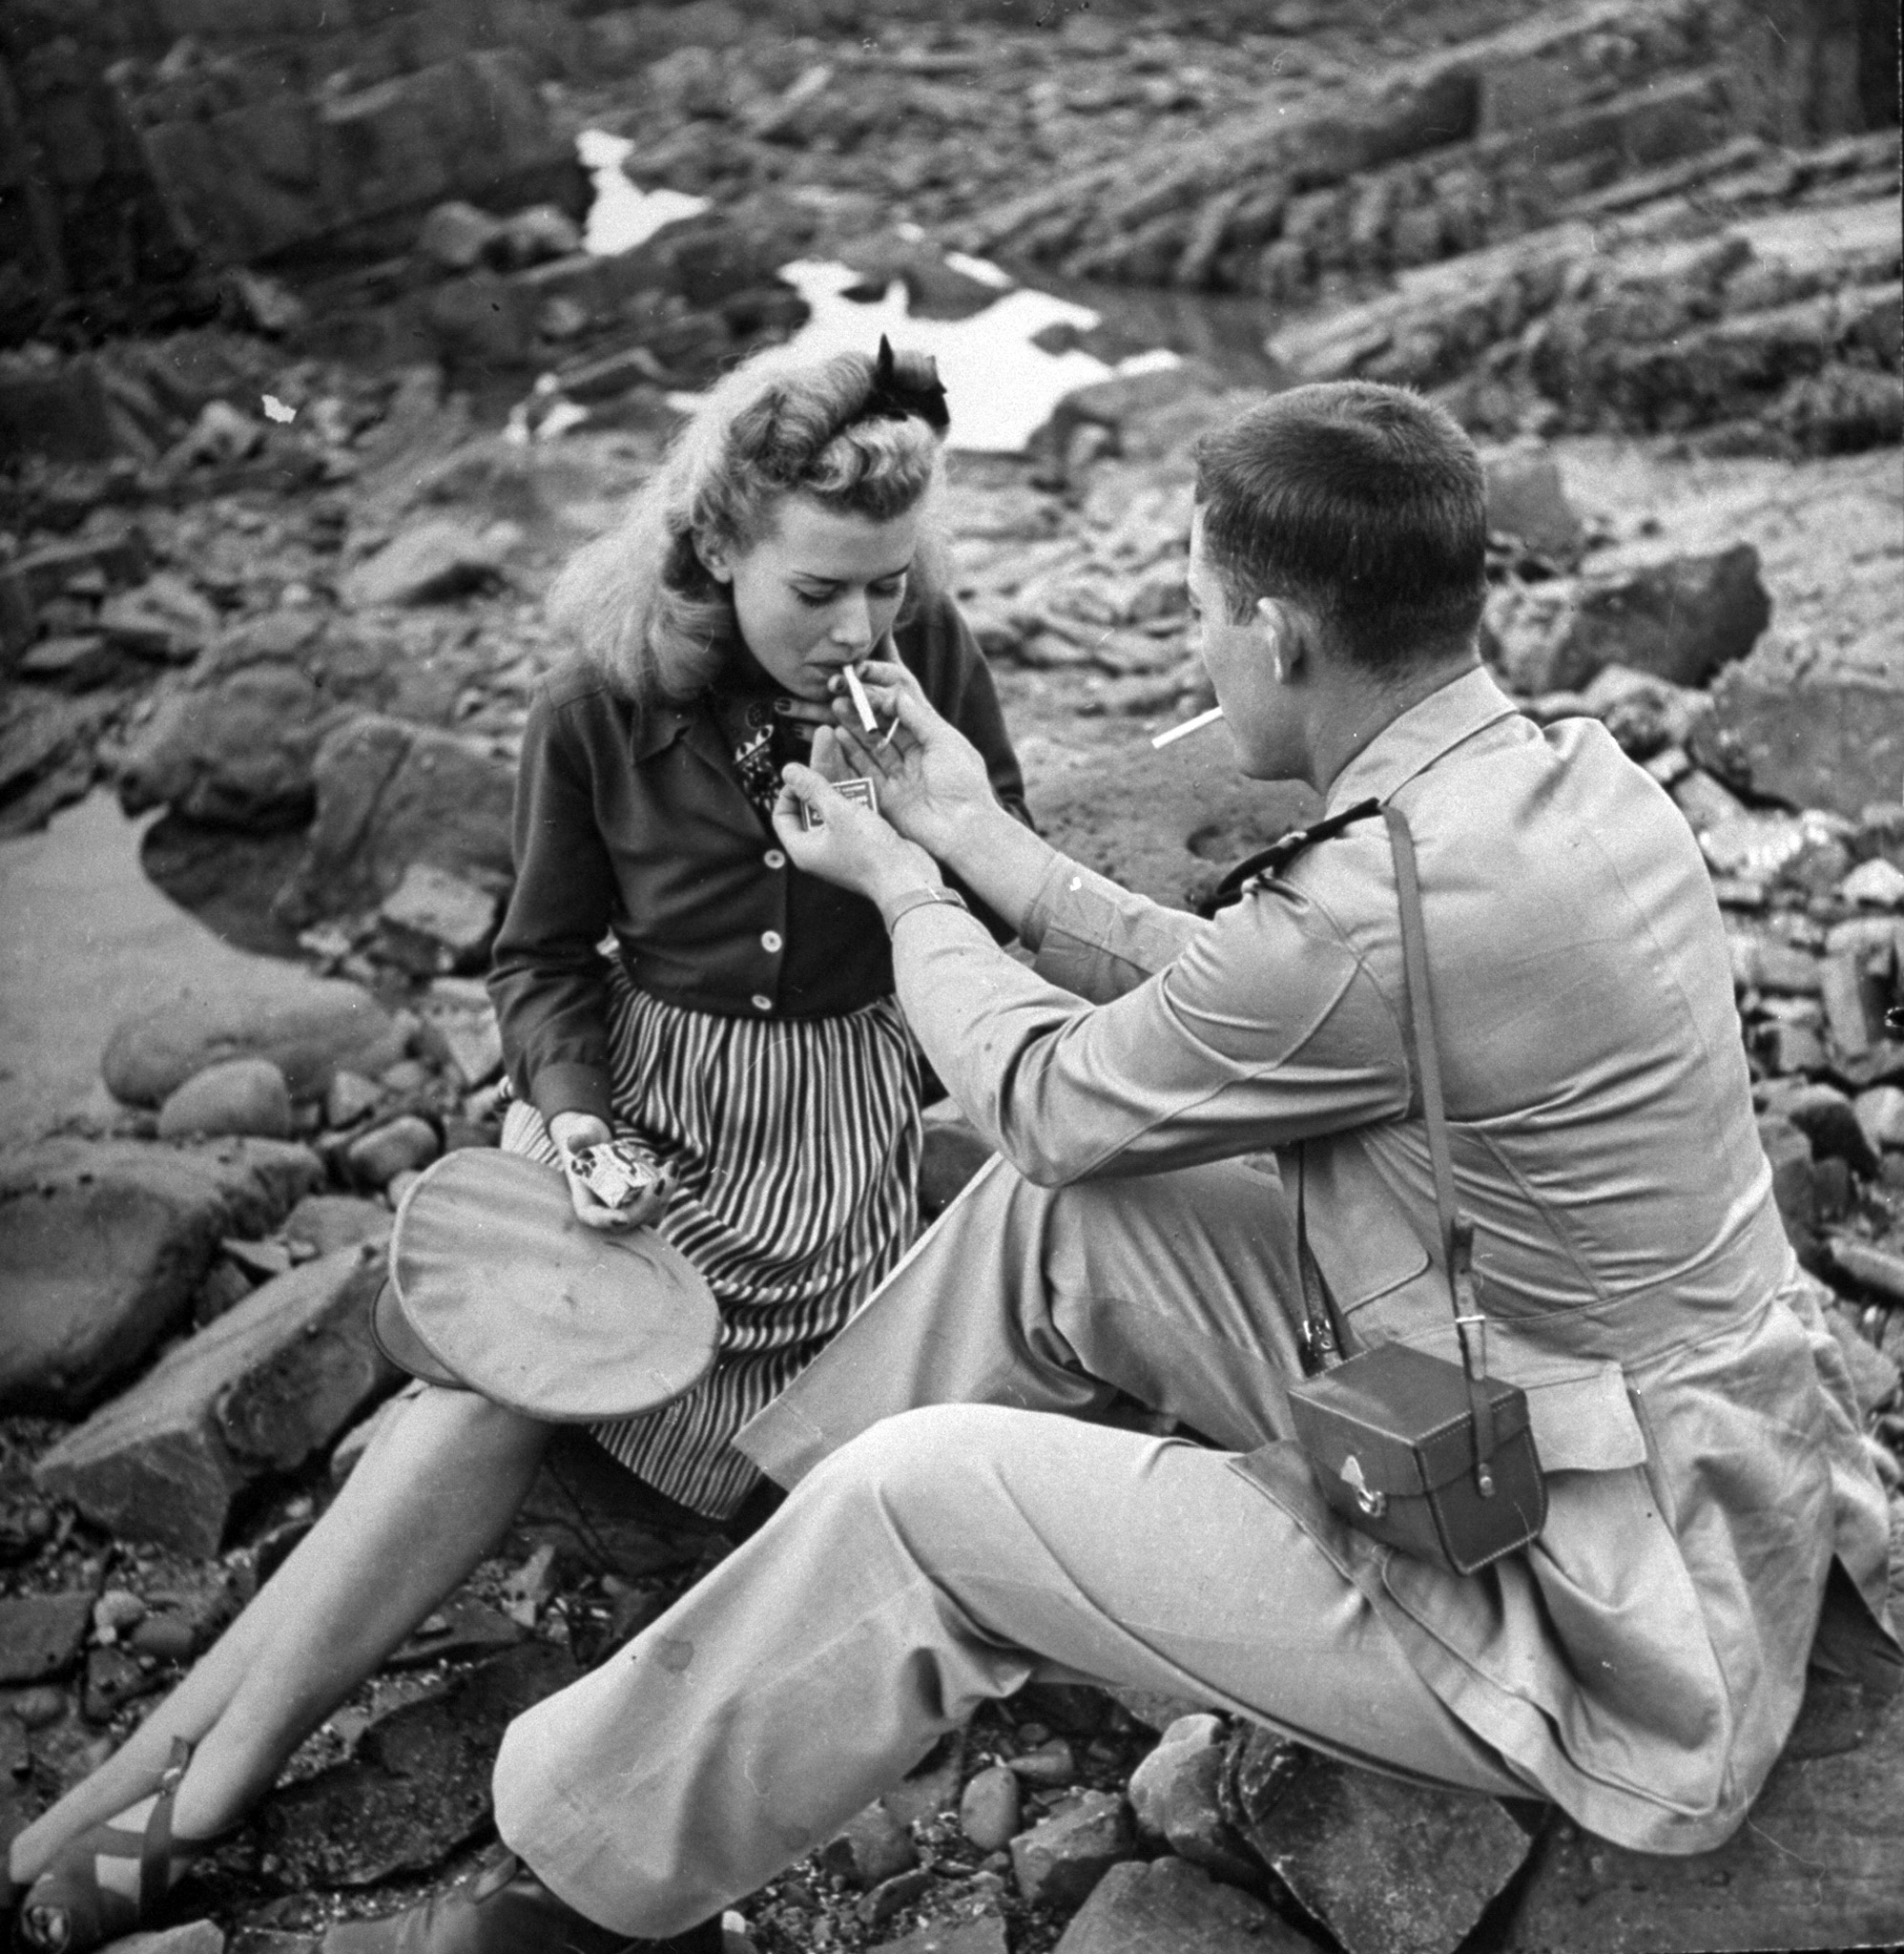 Casablanca love story during World War II, 1943.